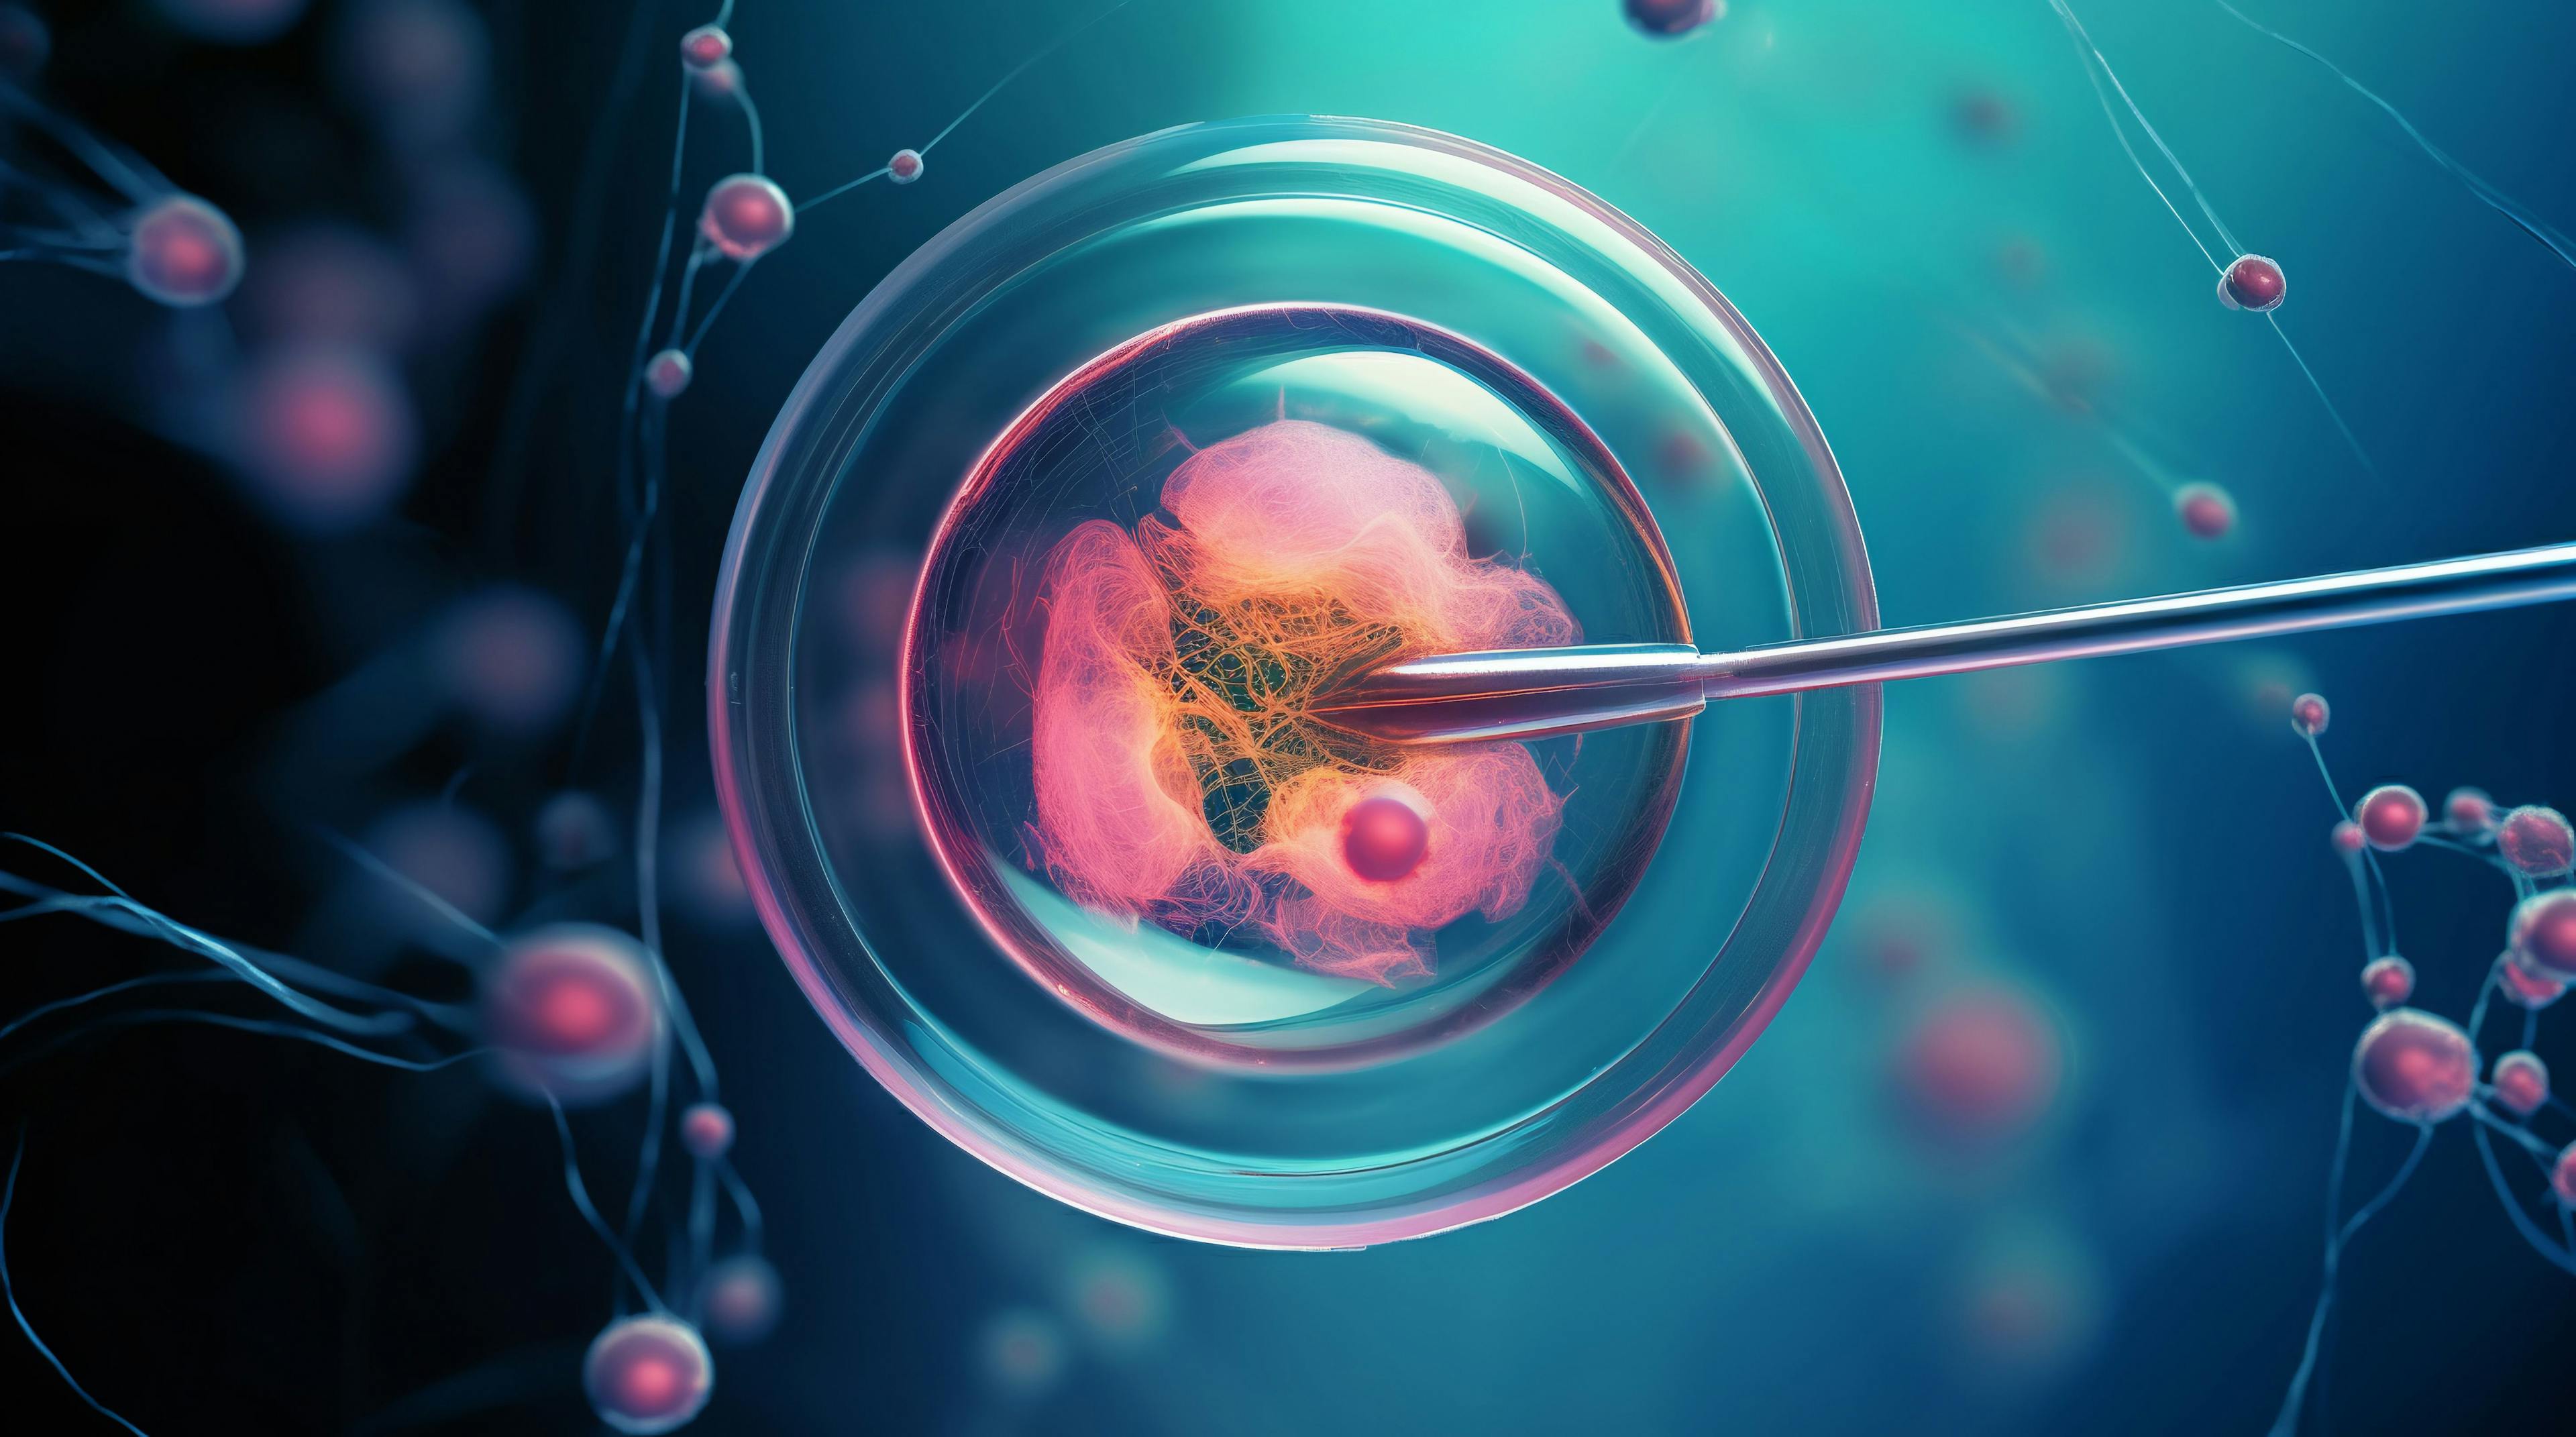 IVF, In vitro fertilization. Fertilized egg cell and needle realistic illustration | Image Credit: grethental - stock.adobe.com